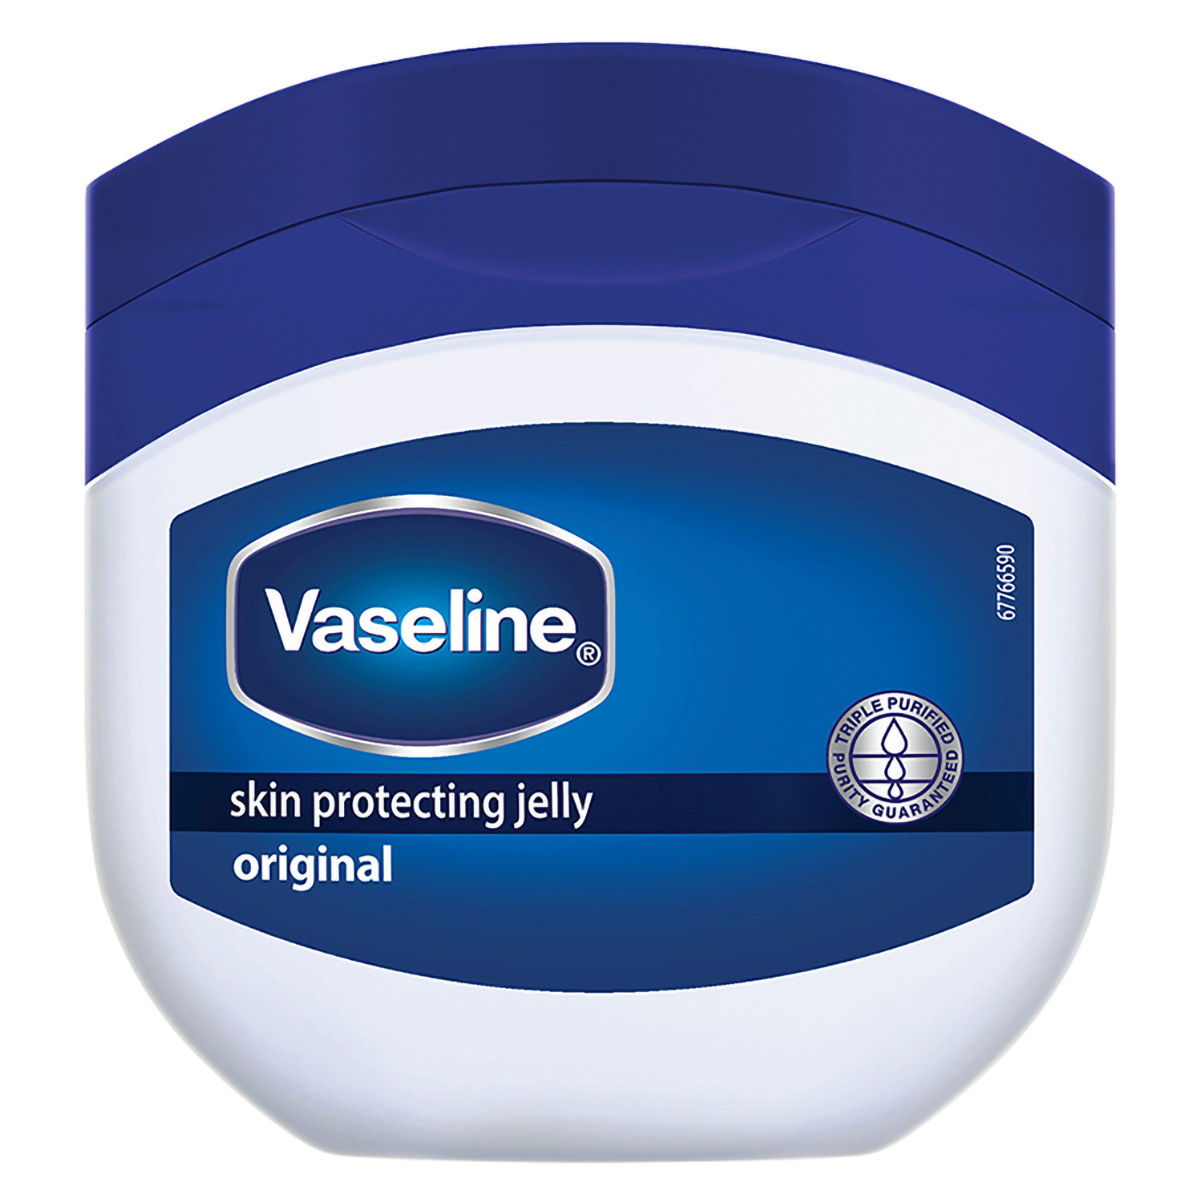 Buy Vaseline Original Pure Skin Jelly, 85 gm Online